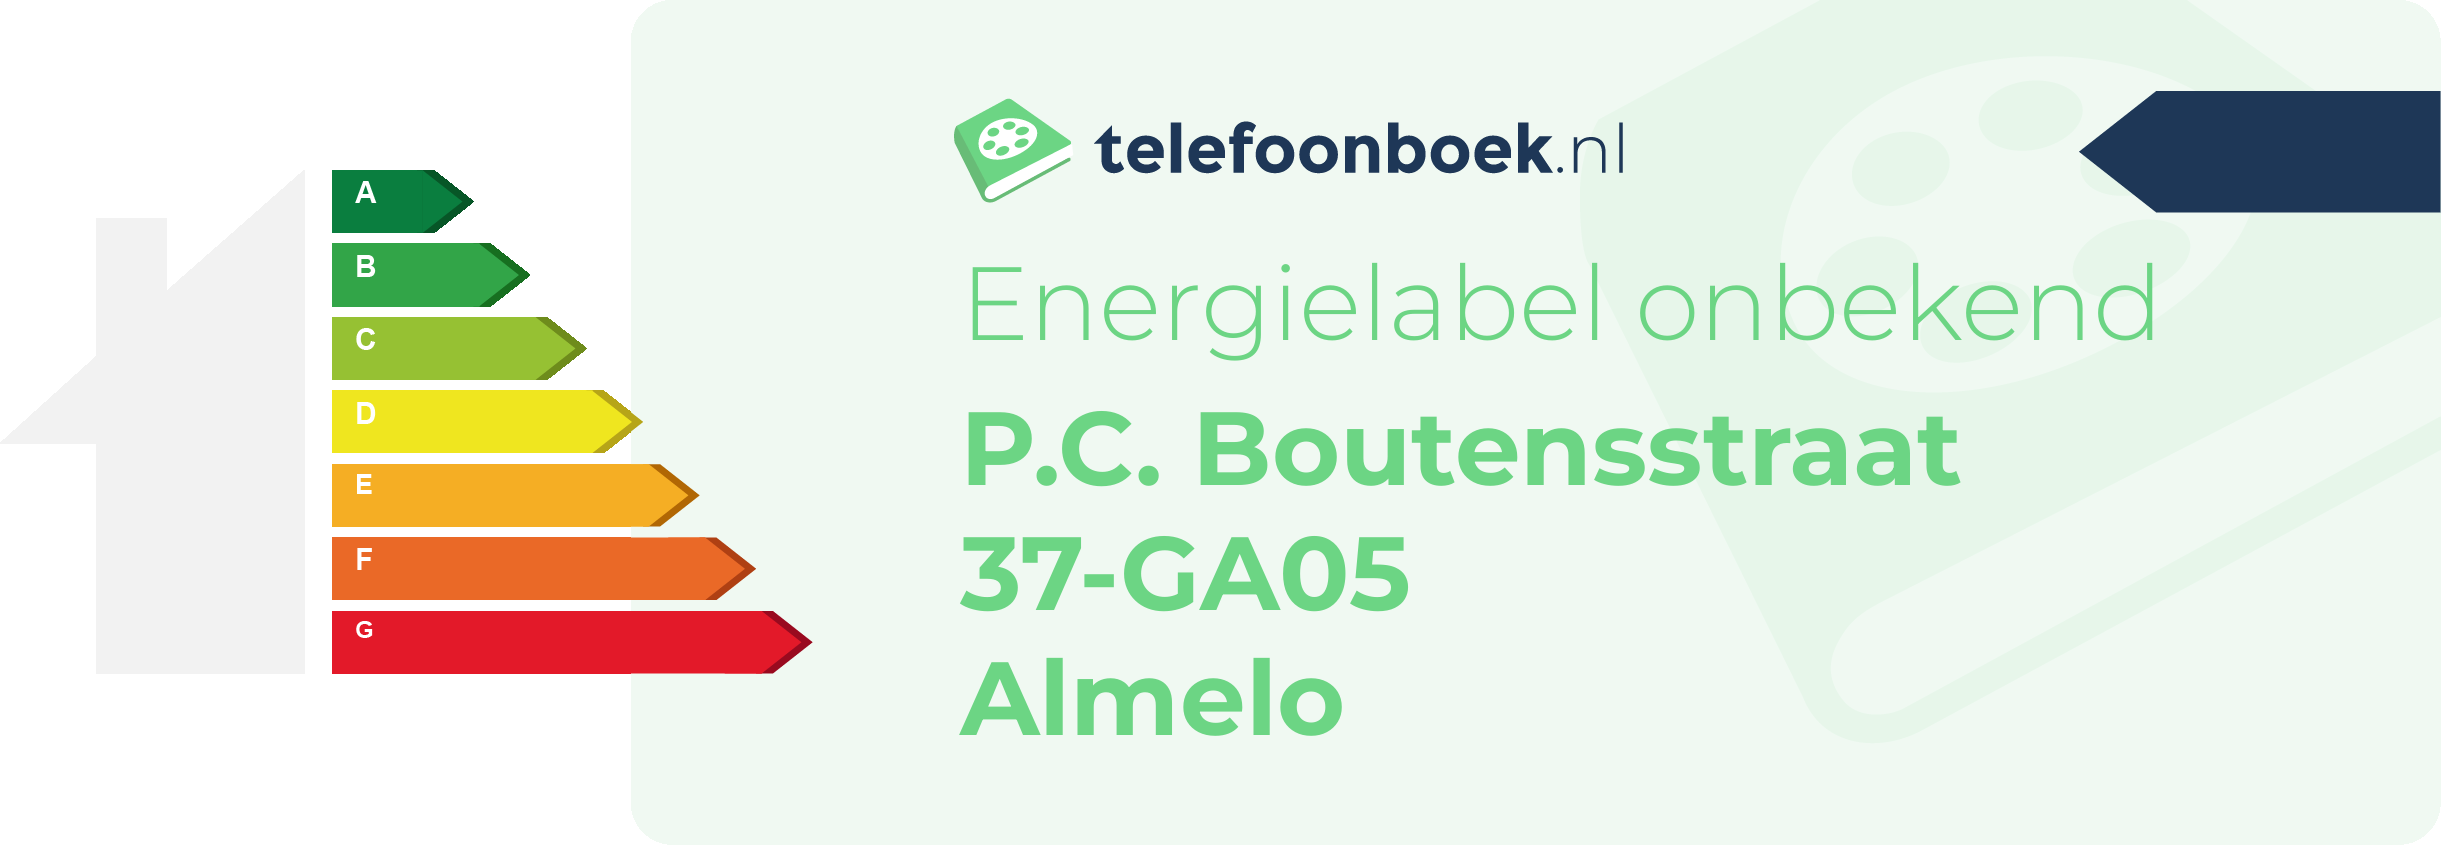 Energielabel P.C. Boutensstraat 37-GA05 Almelo